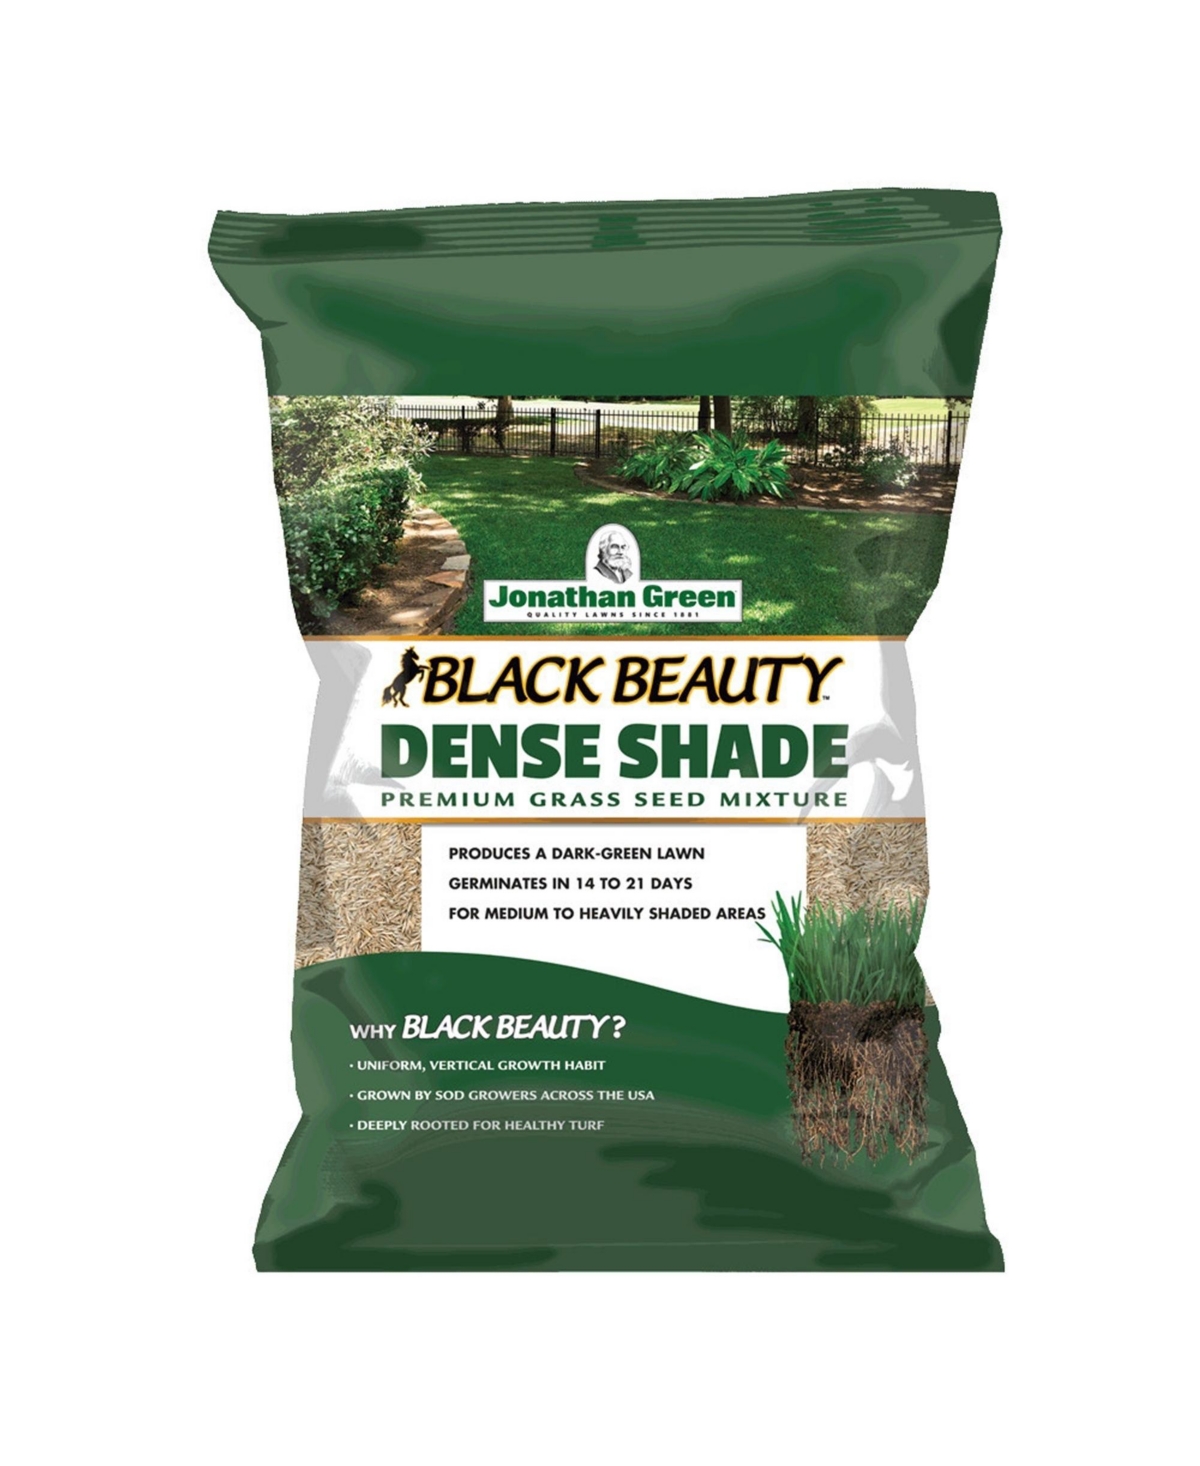 Black Beauty Dense Shade Grass Seed Mix, 1lb bag - Brown